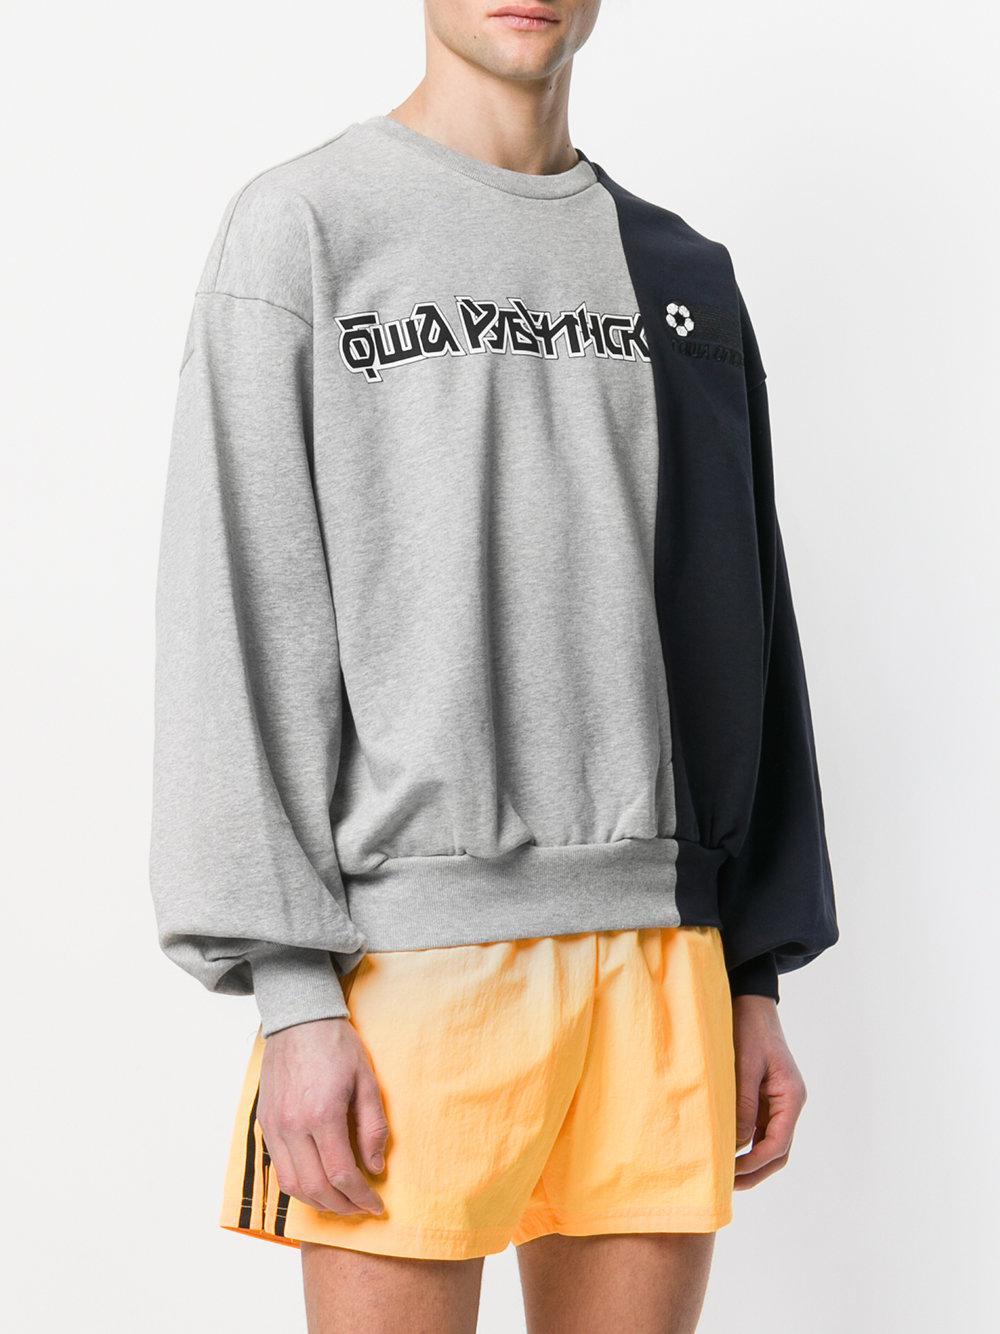 Gosha Rubchinskiy Cotton Bicolour Logo Sweater in Grey (Gray) for Men - Lyst